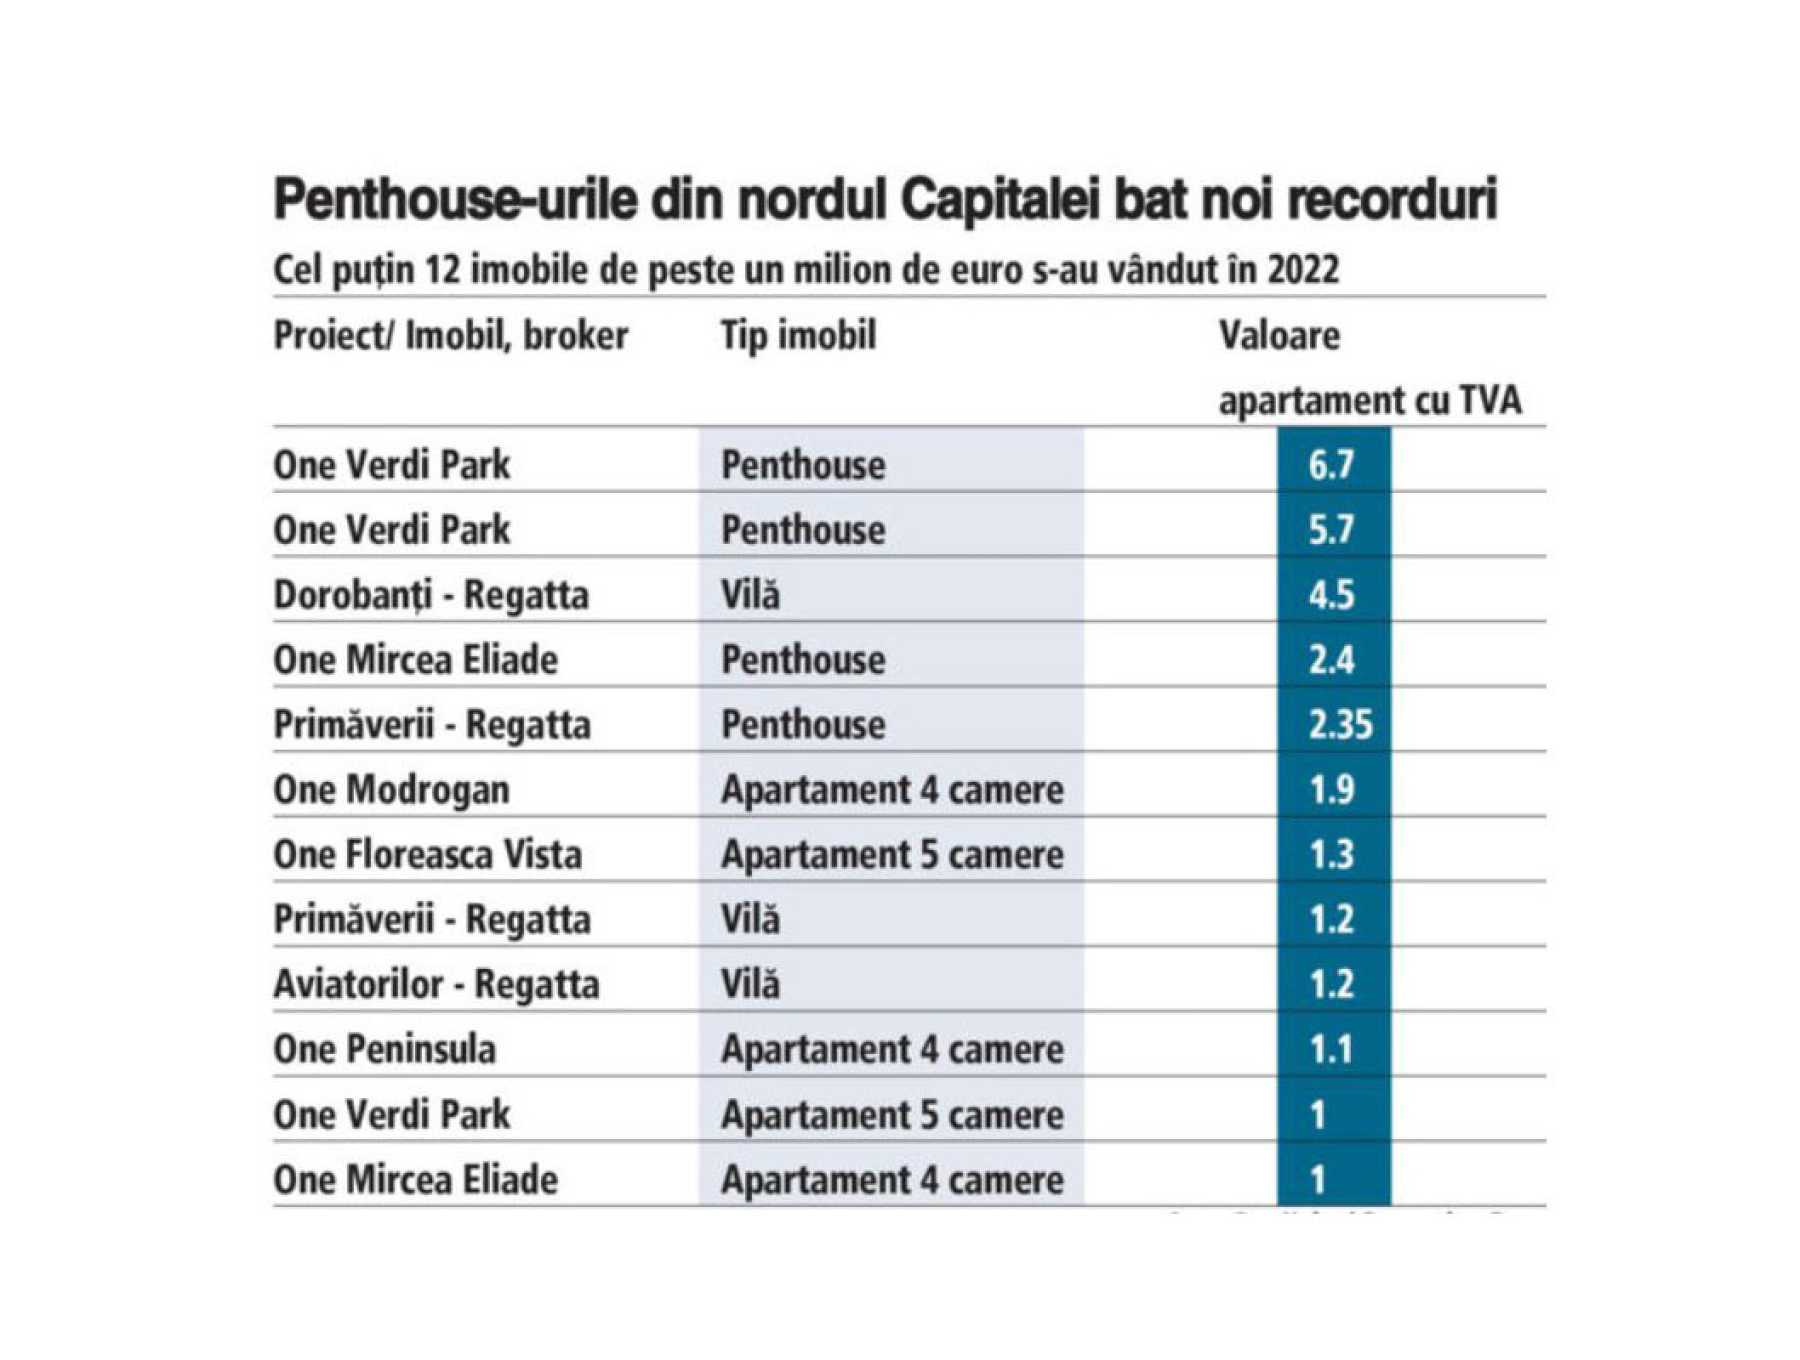 Ziarul Financiar – Real Estate Analysis. Top deals in Bucharest